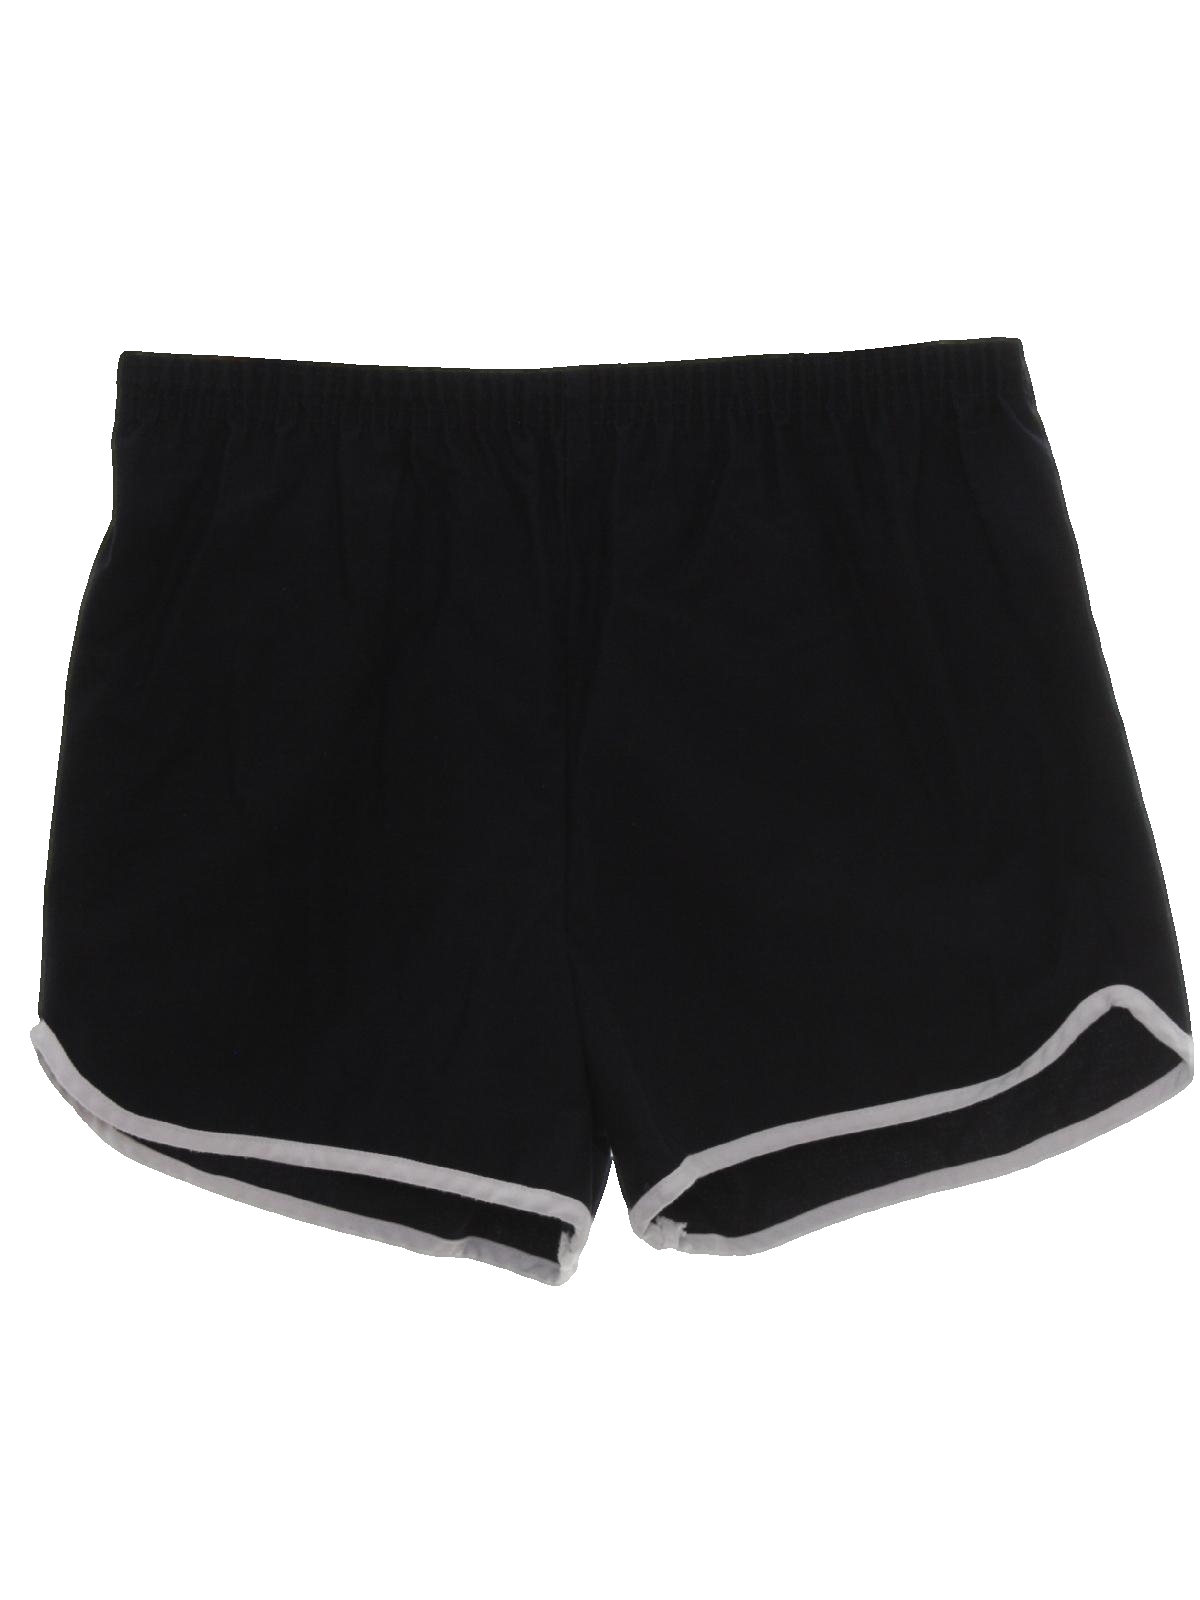 Vintage 80s Shorts: 80s -Bob Barker- Unisex Navy background polyester ...